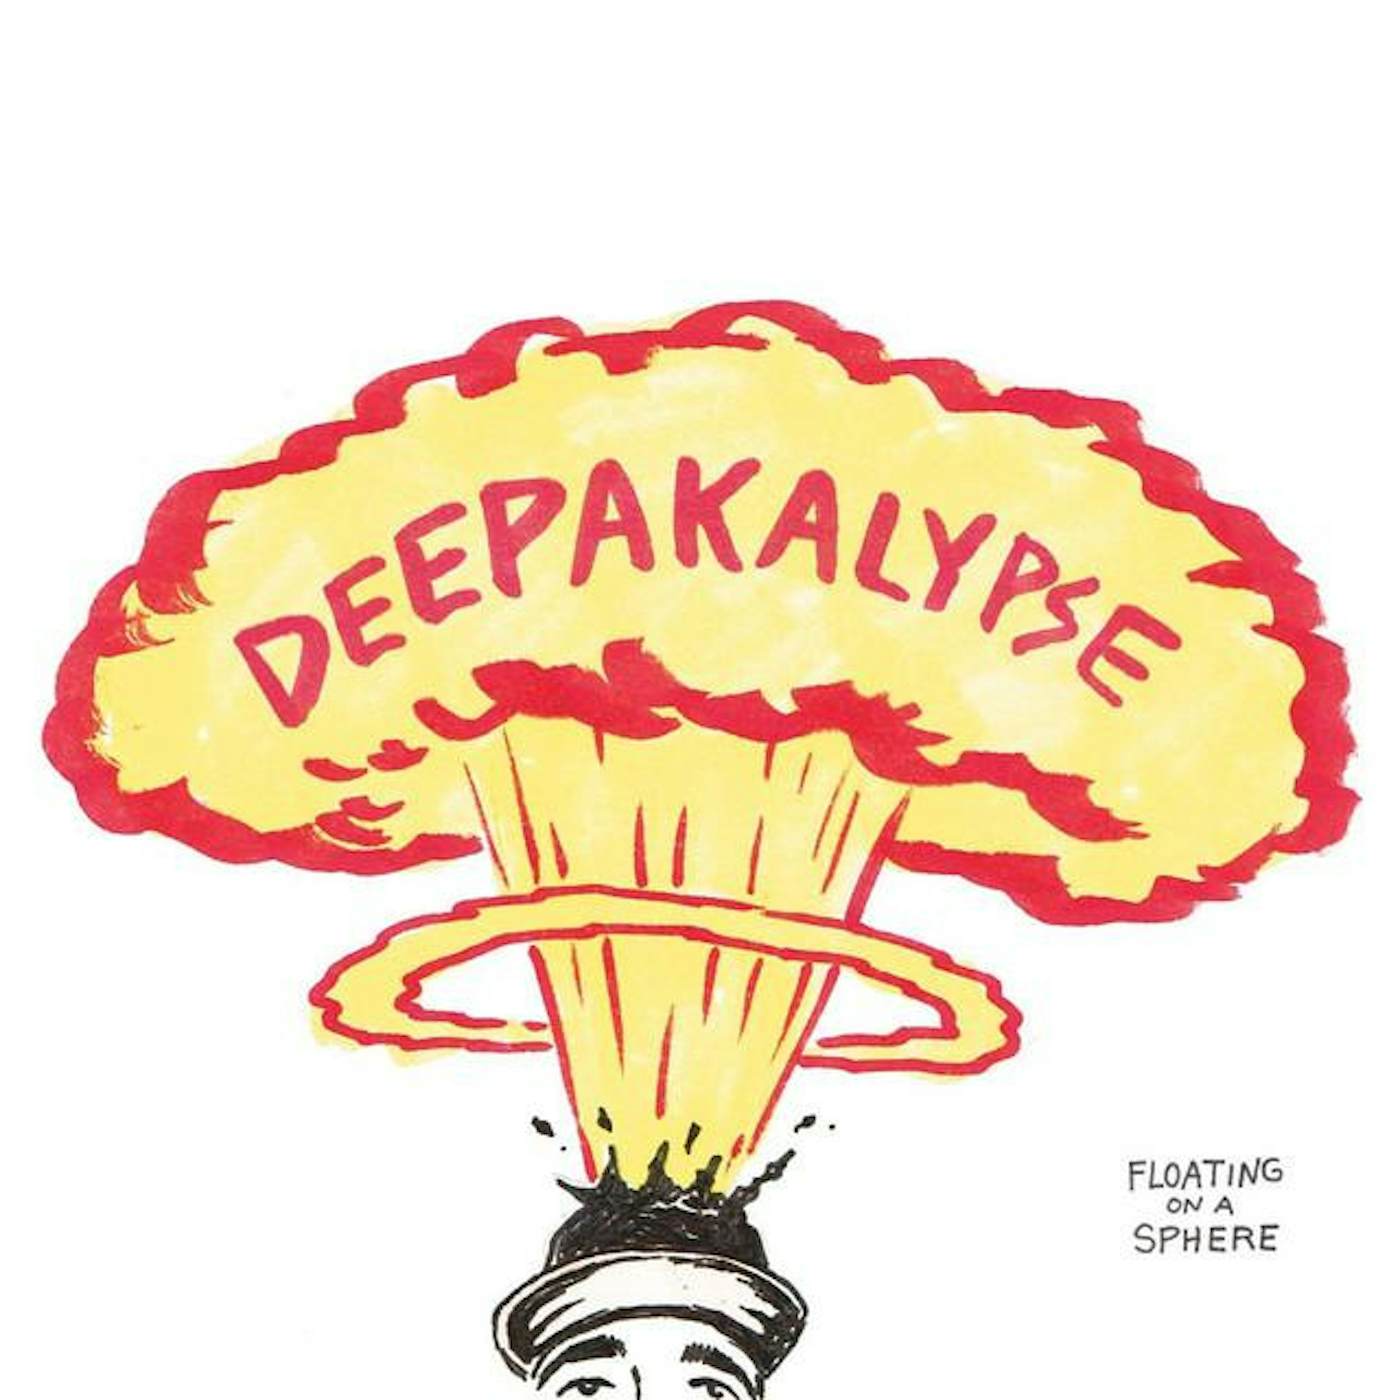 Deepakalypse